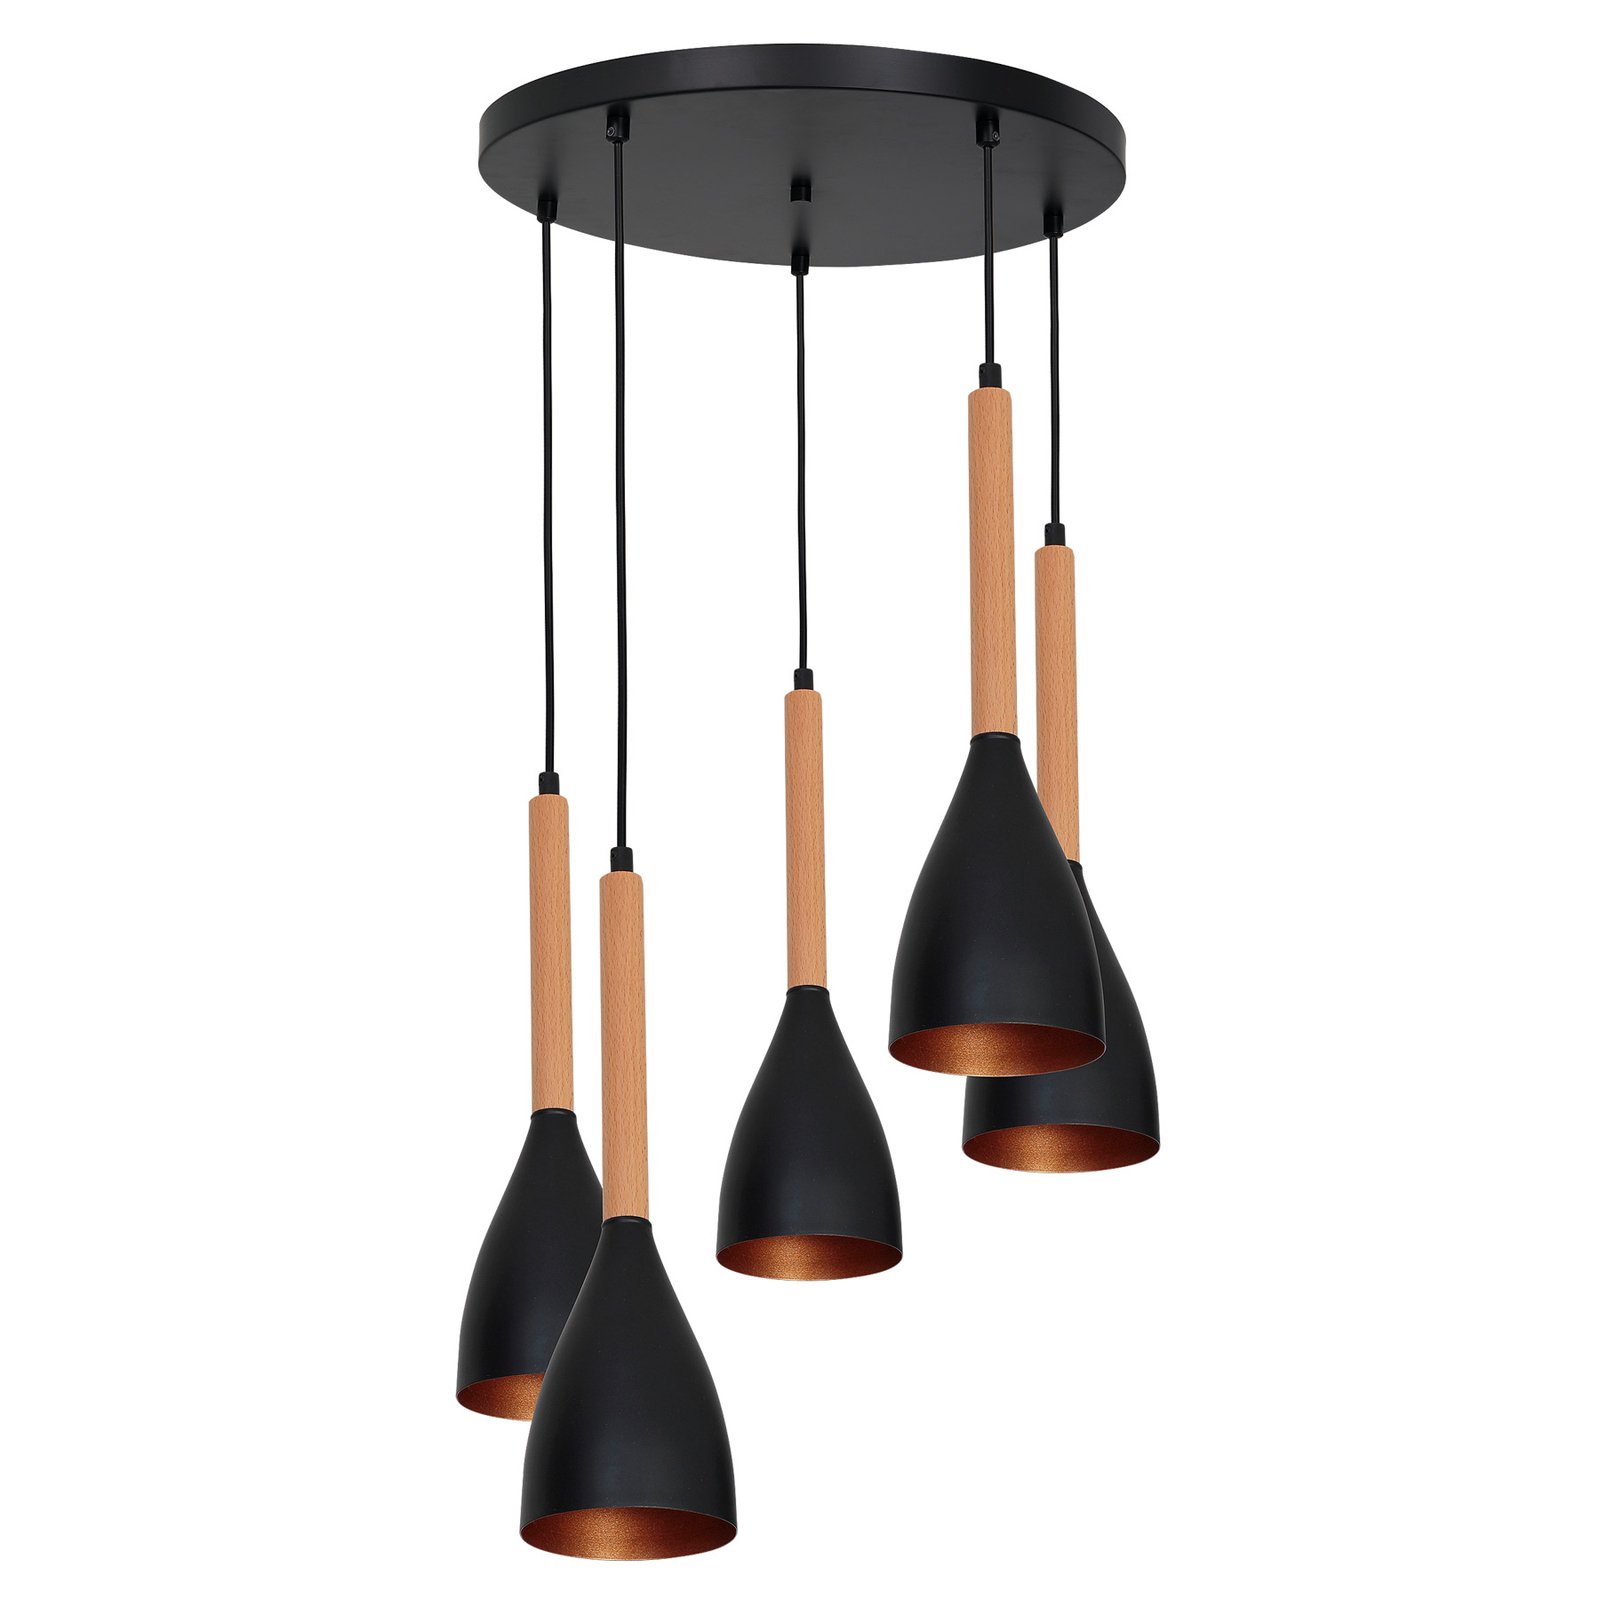 Muza hanging 5-bulb round black/gold/light wood